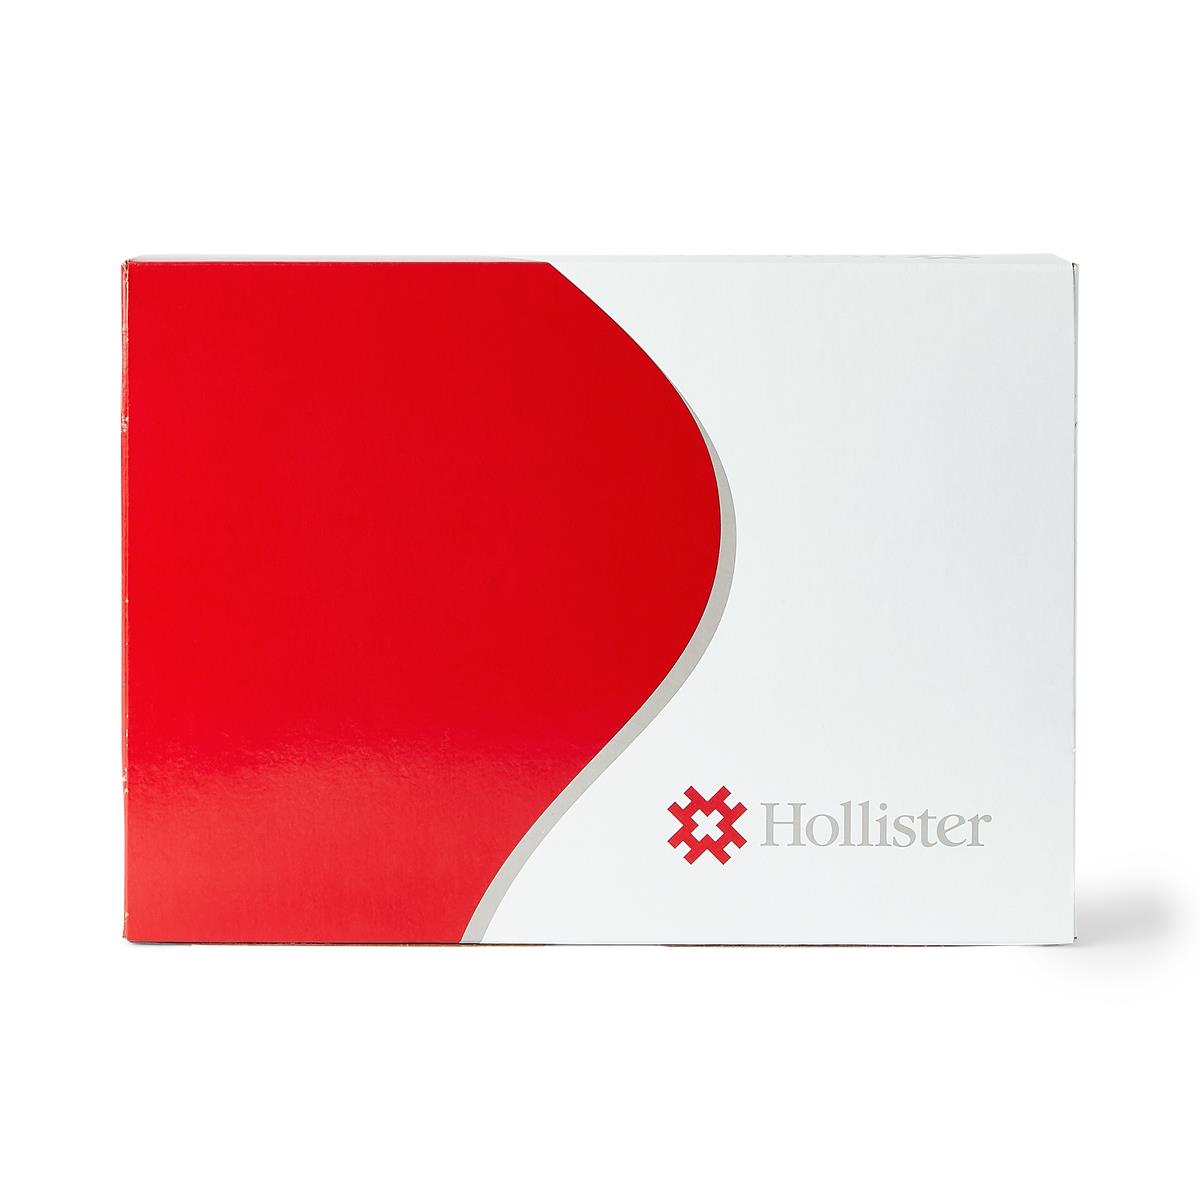 Hollister 8935 CeraPlus Premier™ One Piece Kits - Box of 10